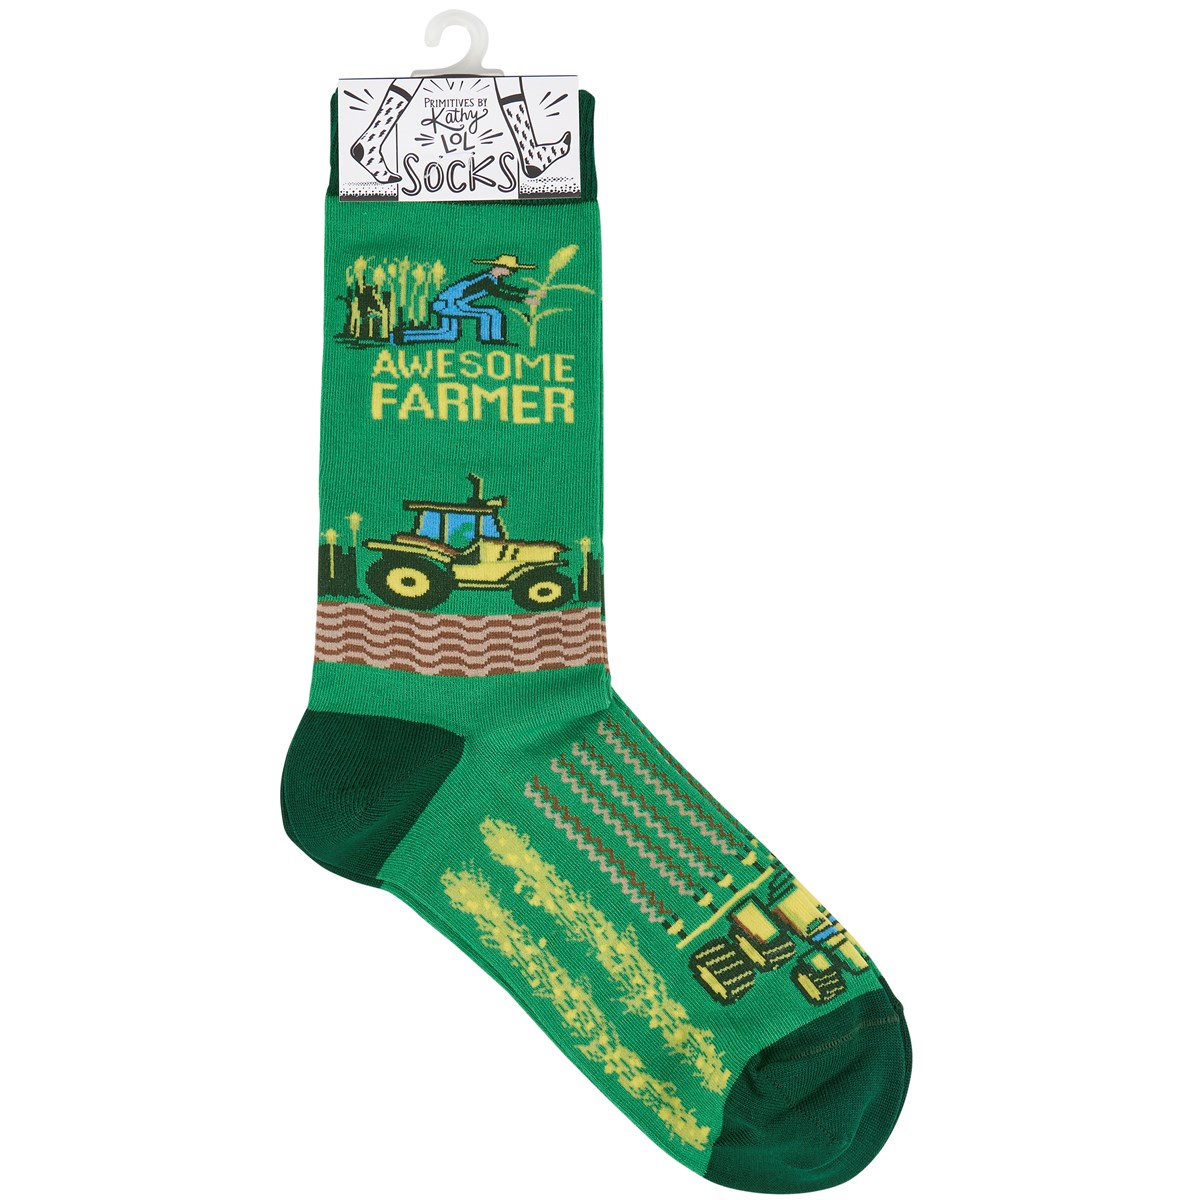 Awesome Farmer Socks - Cotton, Nylon, Spandex